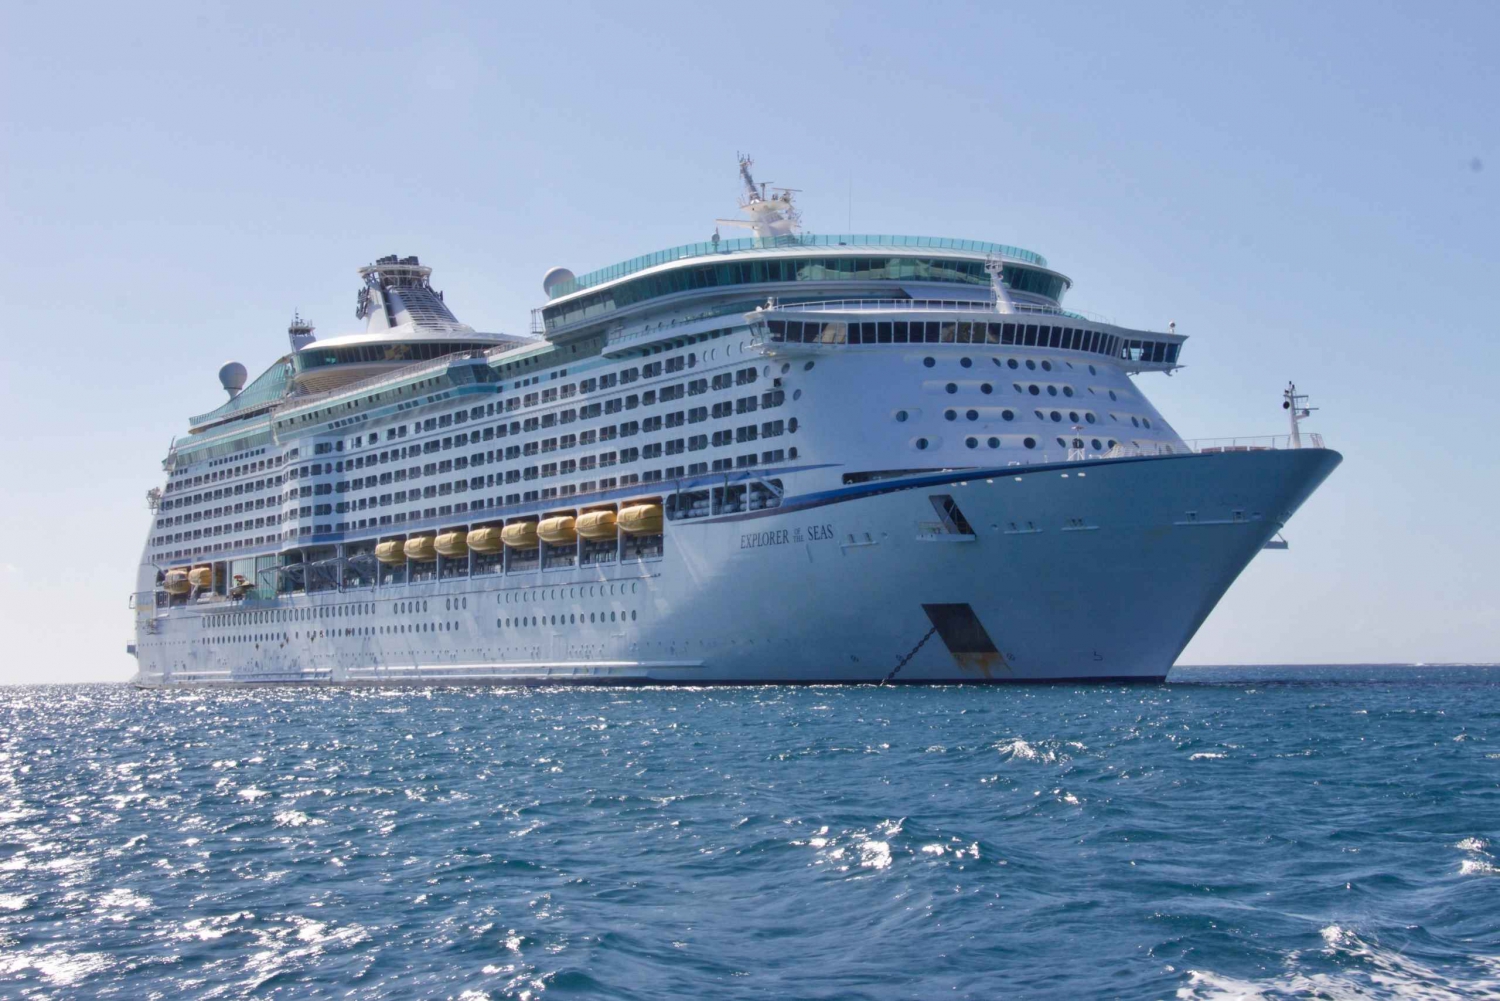 Bridgetown (Barbados) Cruise Port: Transfer to Island hotels